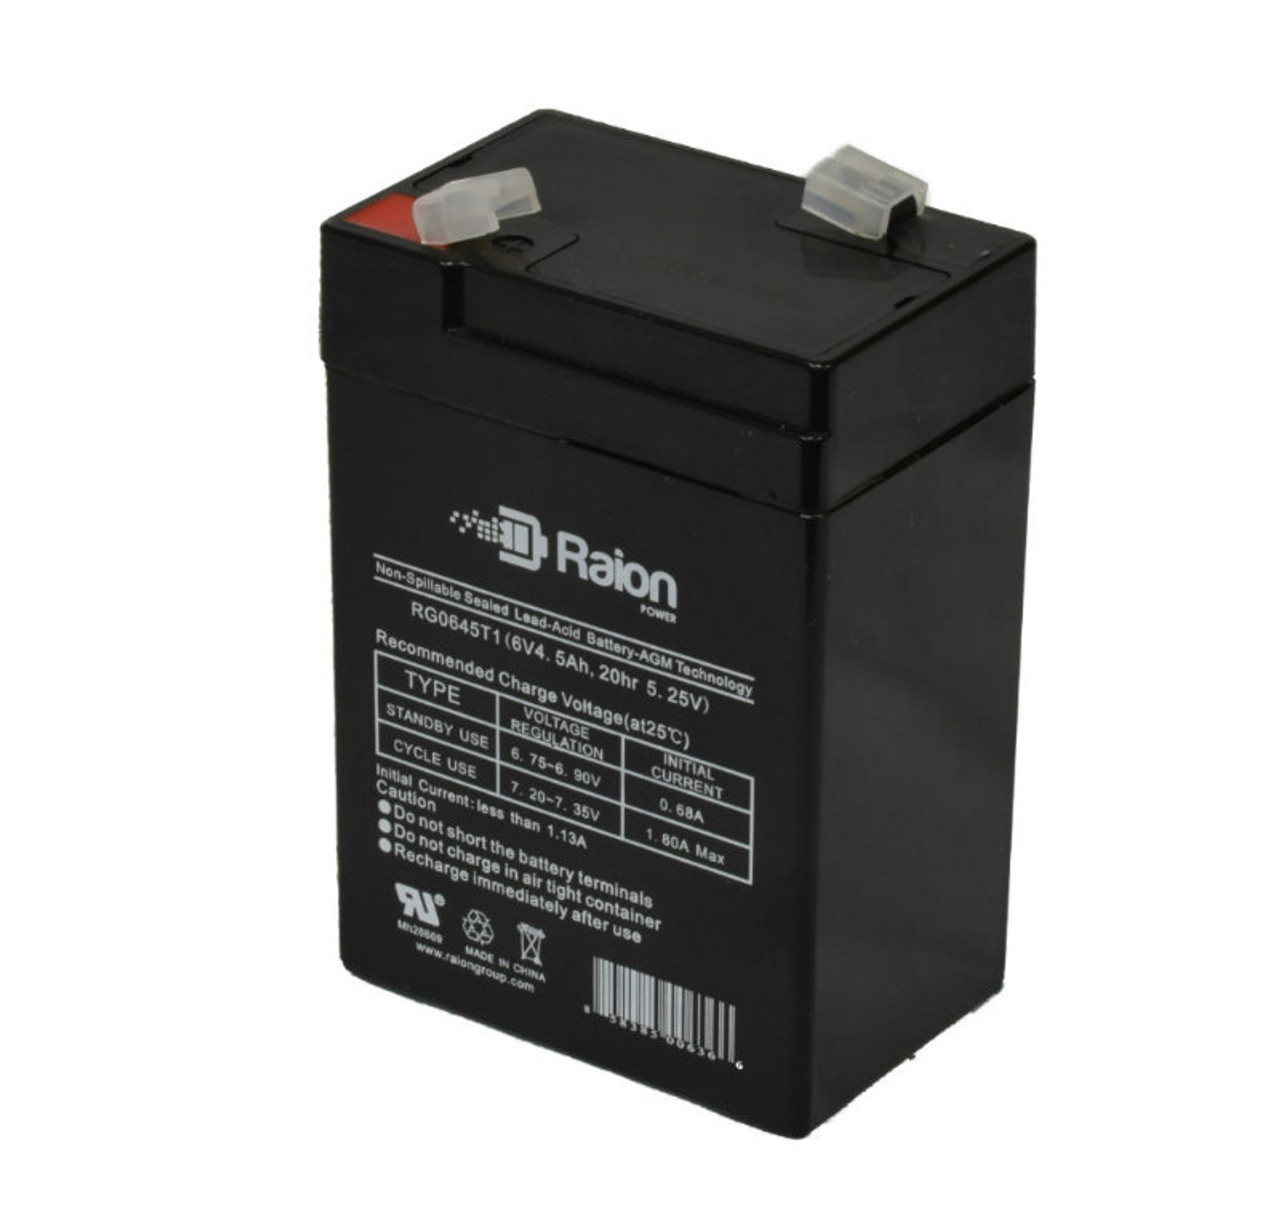 Raion Power RG0645T1 6V 4.5Ah Replacement Battery Cartridge for Sonnenschein A206/3.8K